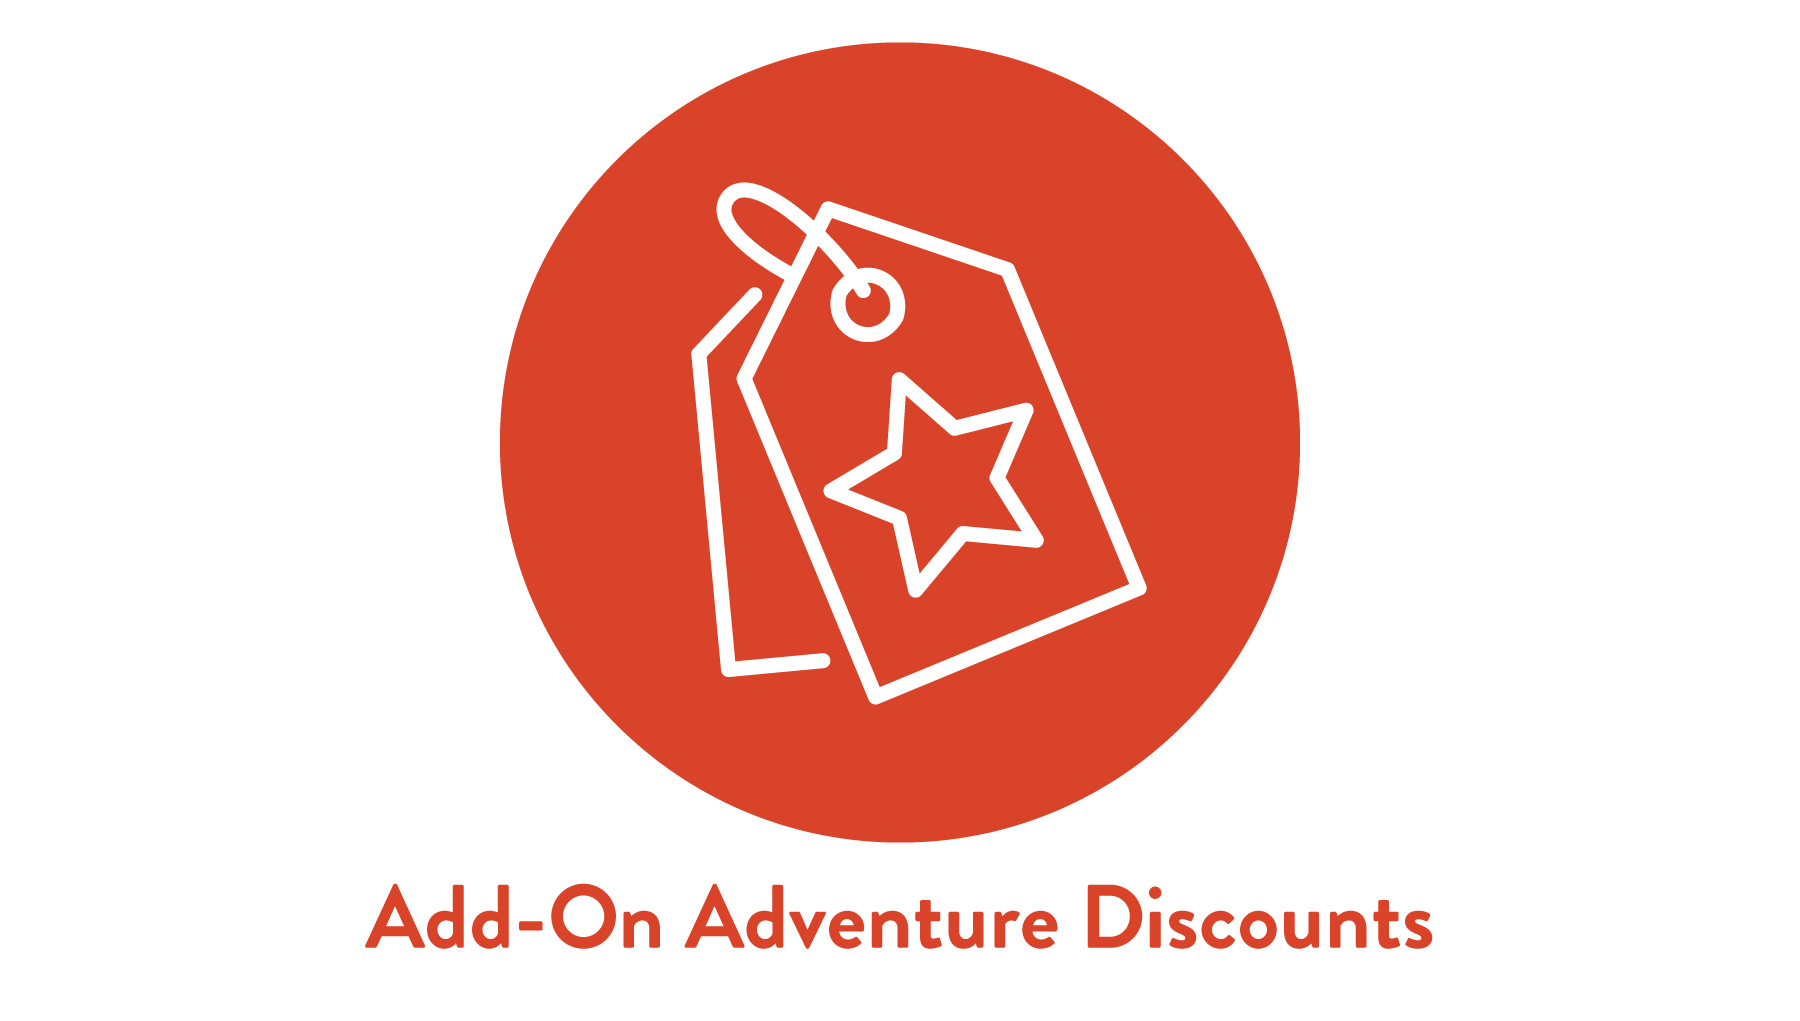 Add-On Adventure Discounts